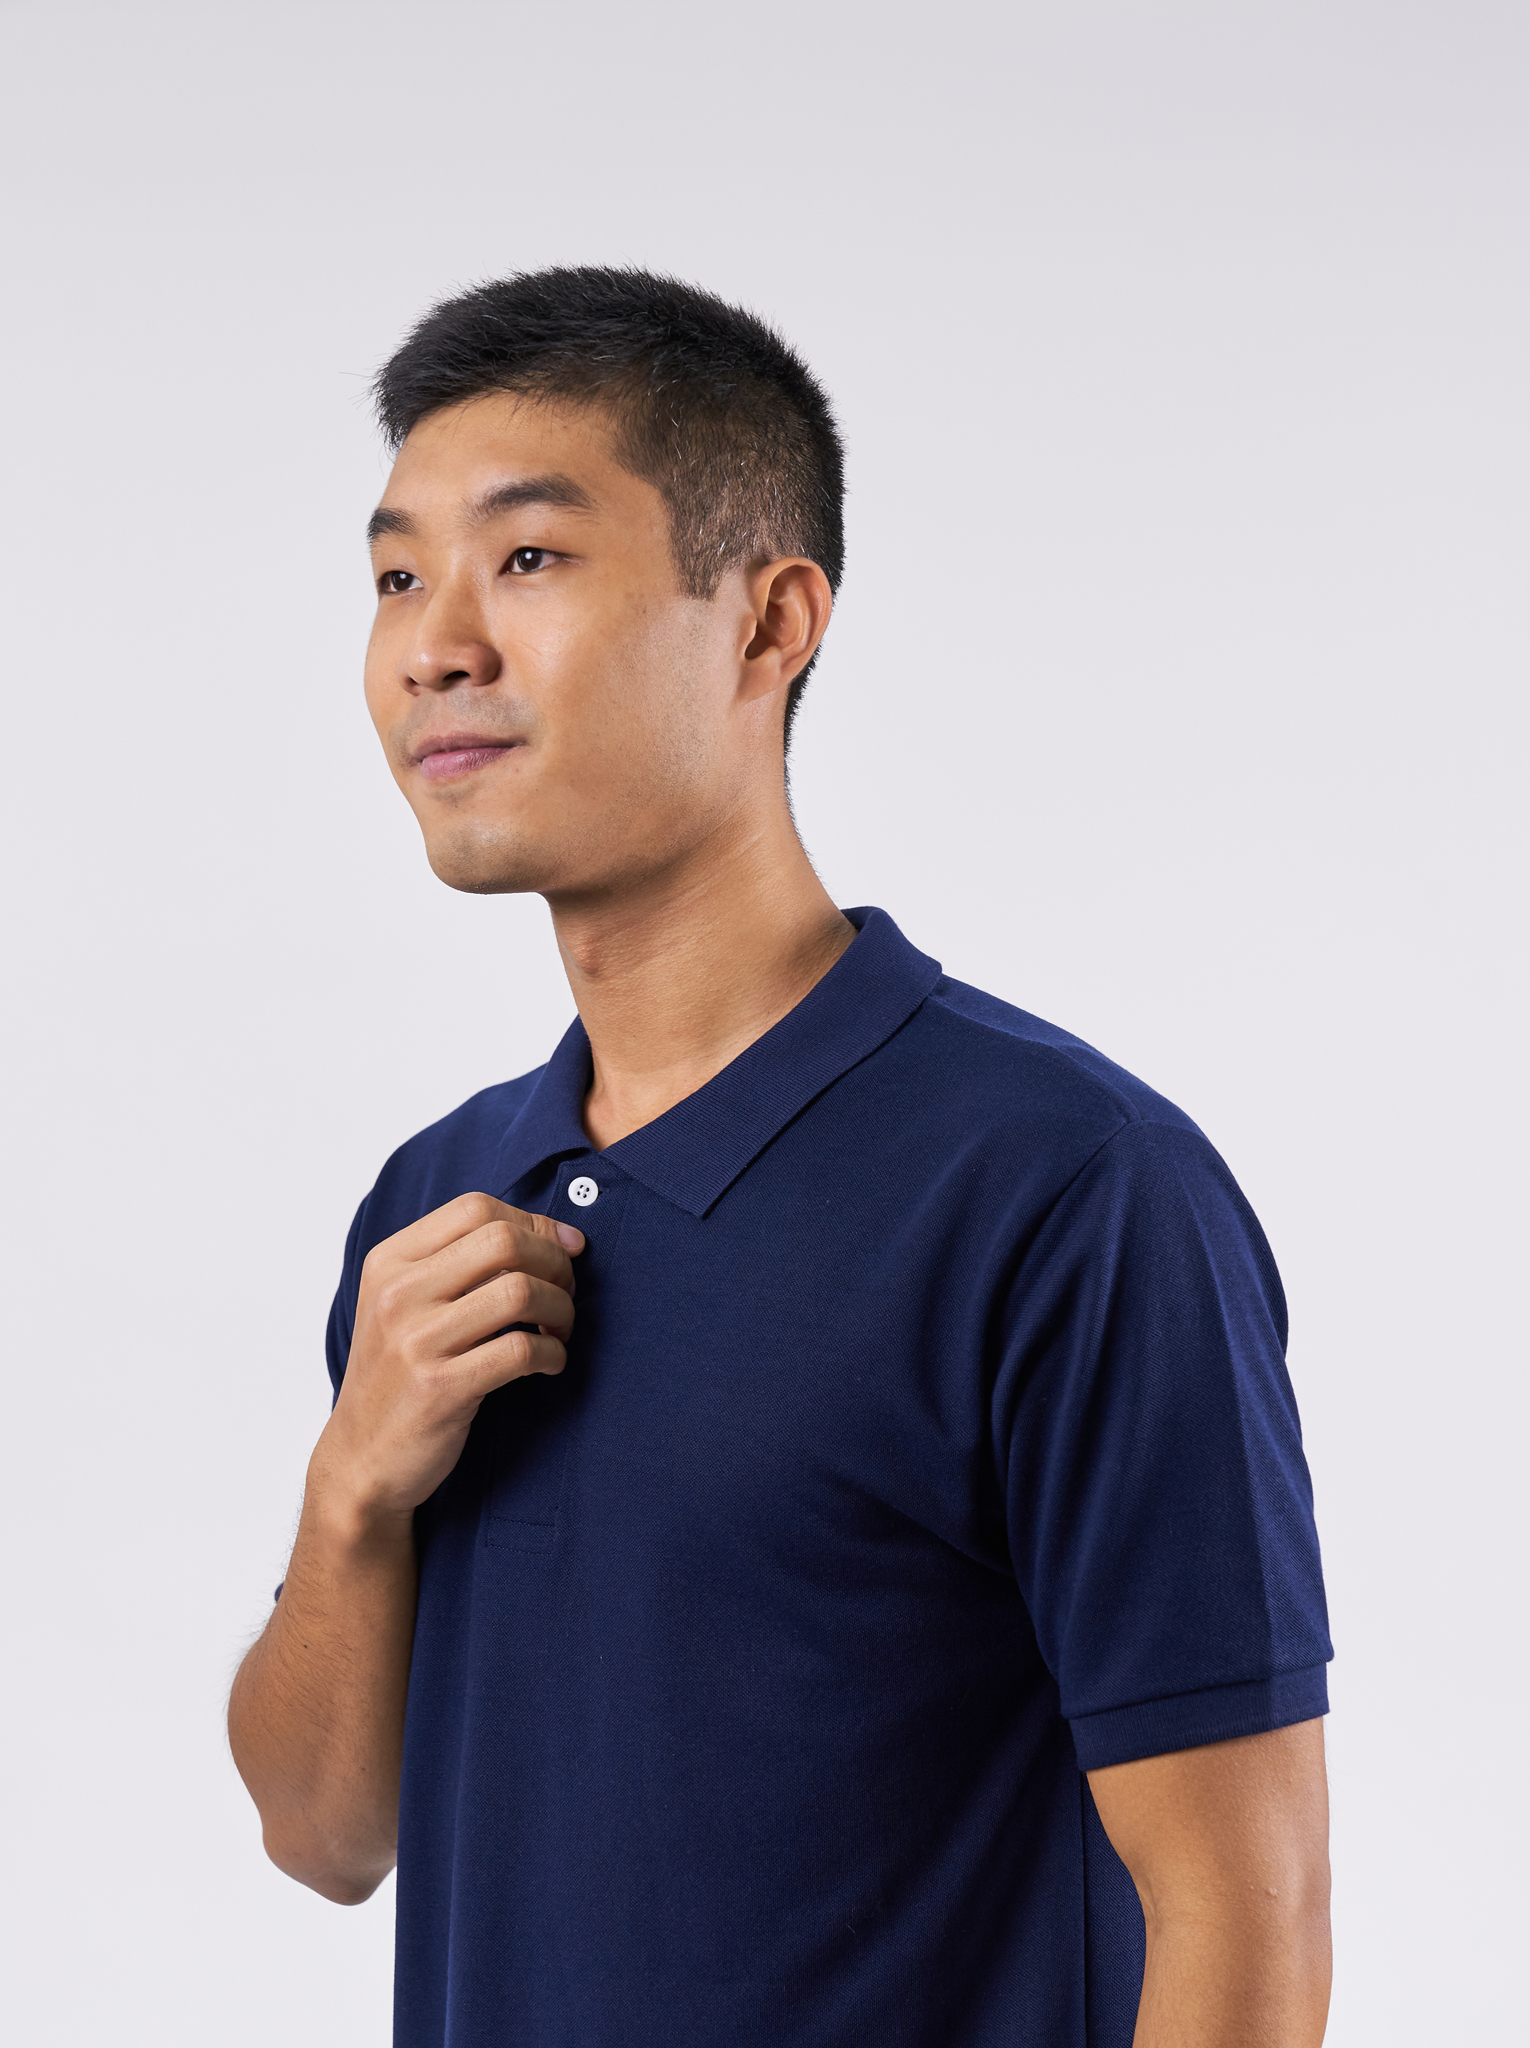 Polo Shirt เสื้อโปโล (Navy Blue, สีกรมท่า)(Unisex)